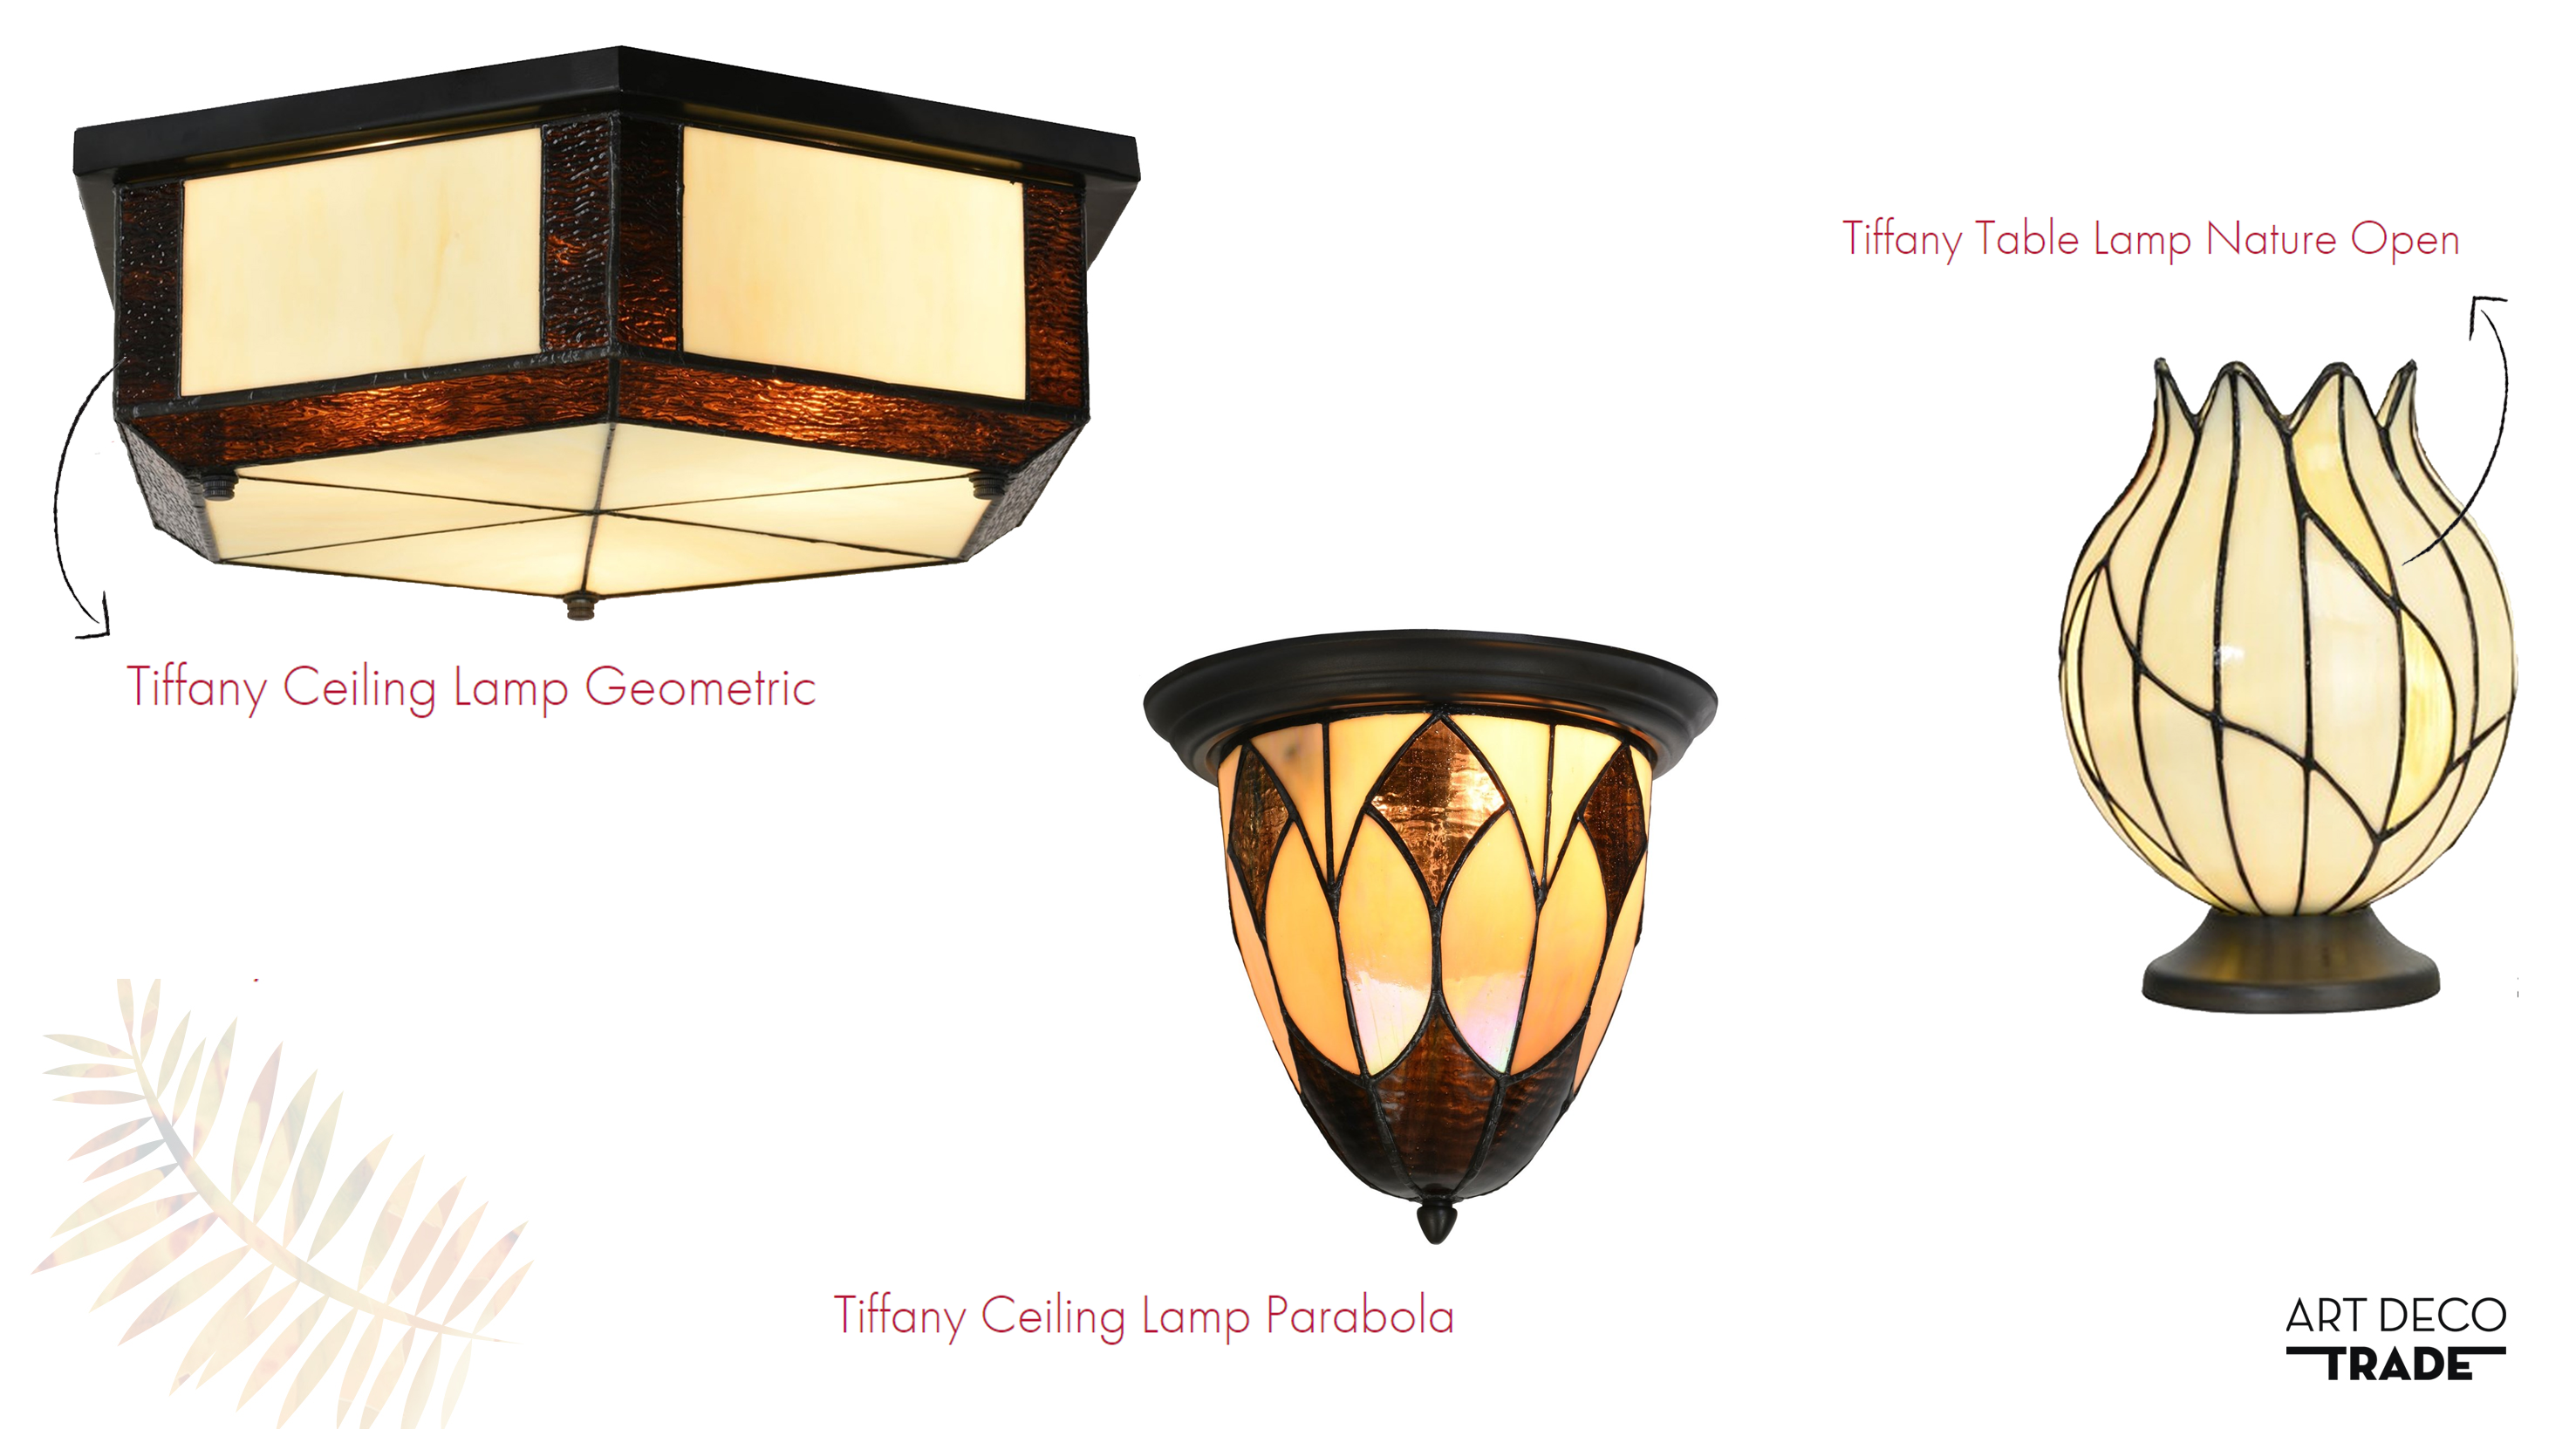 Tiffany Plafonnier Geometric et Tiffany Lampe de Table Nature Ouverte